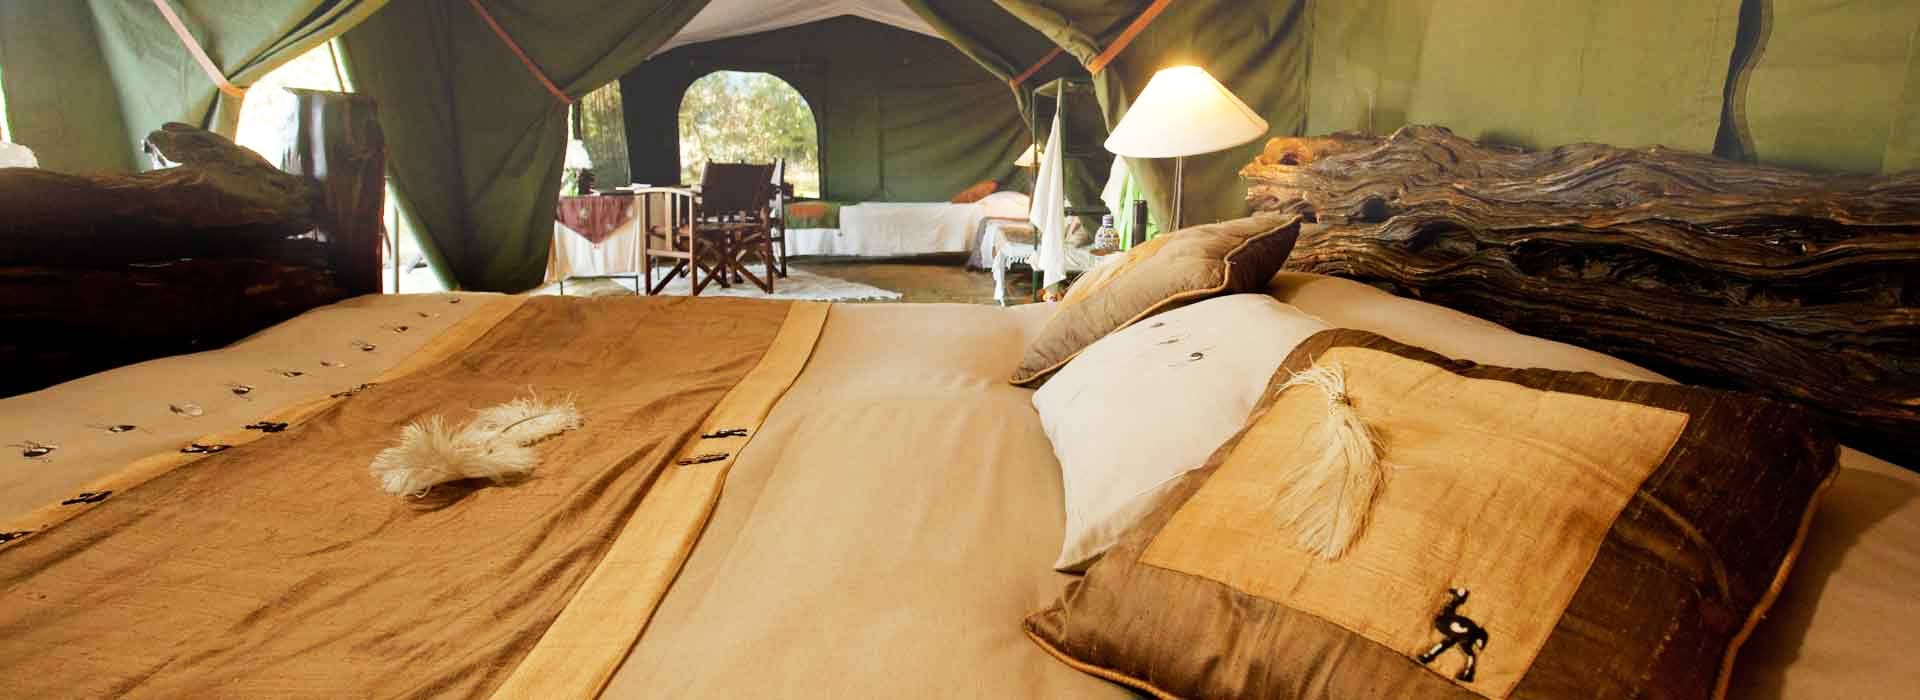 Tanzania Budget Camping Safari